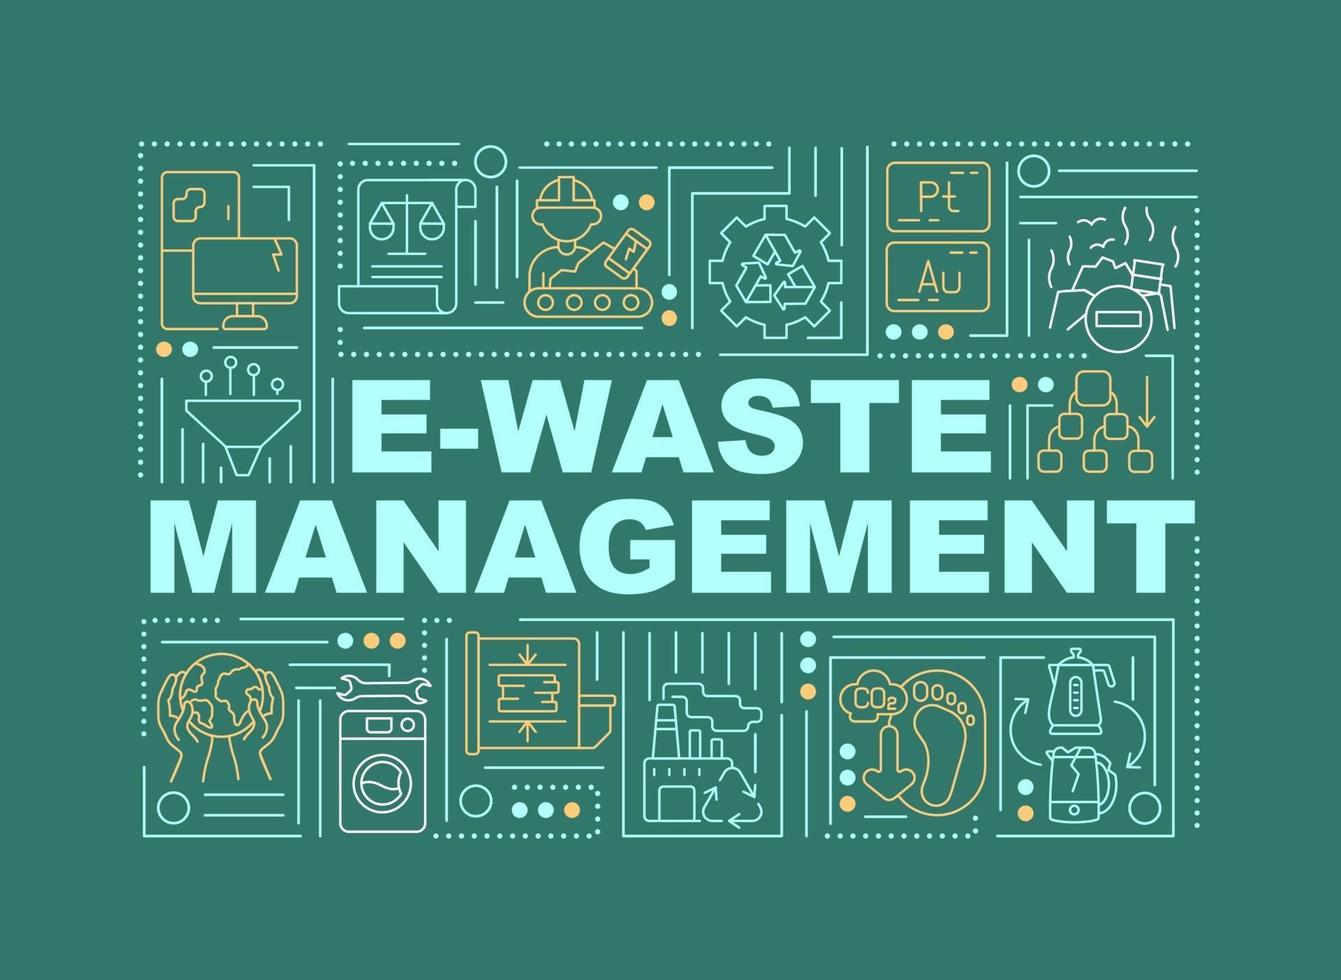 e-waste management woord concepten banner vector